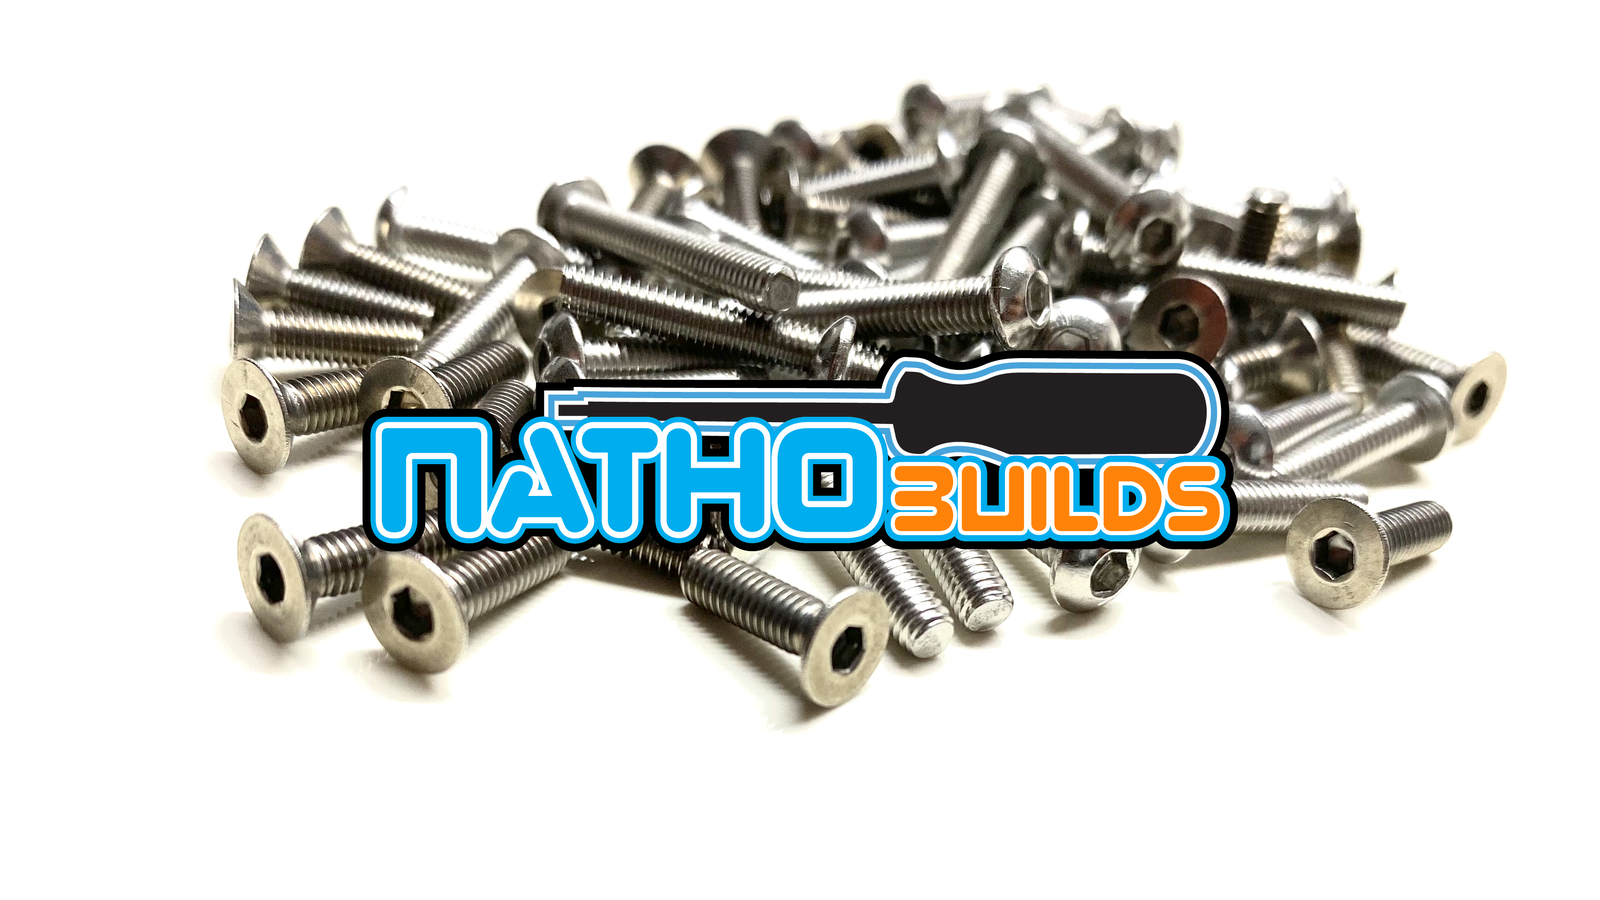 NathoBuilds: Stainless Steel Screw Kits for 1/8th - XRay XB8E 2020